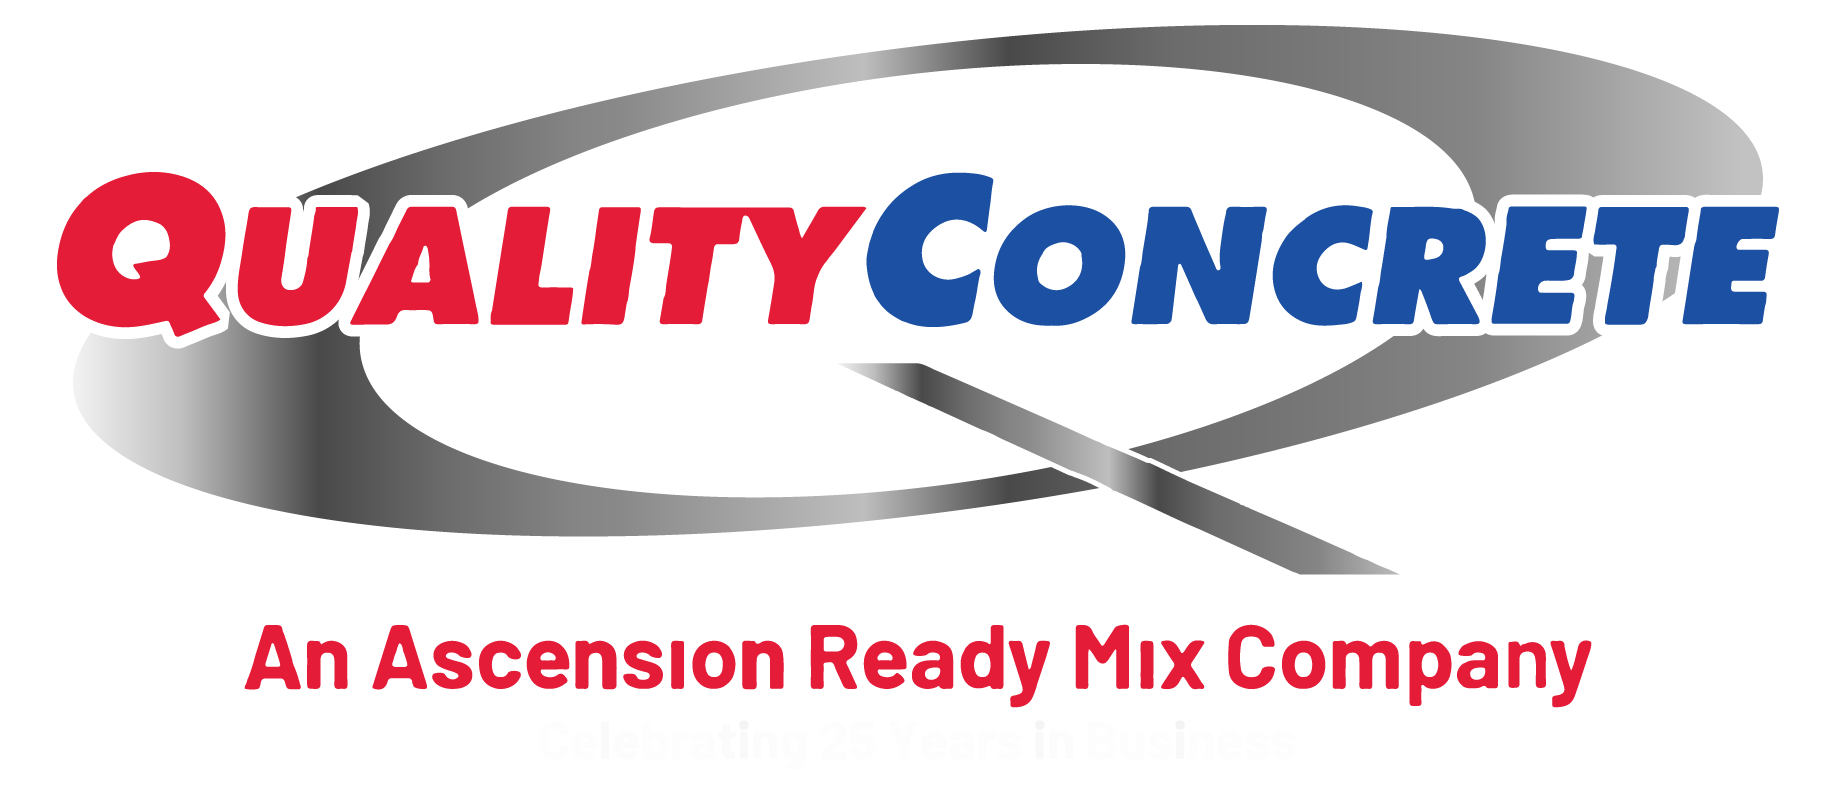 quality concrete an ascension ready mix company logo